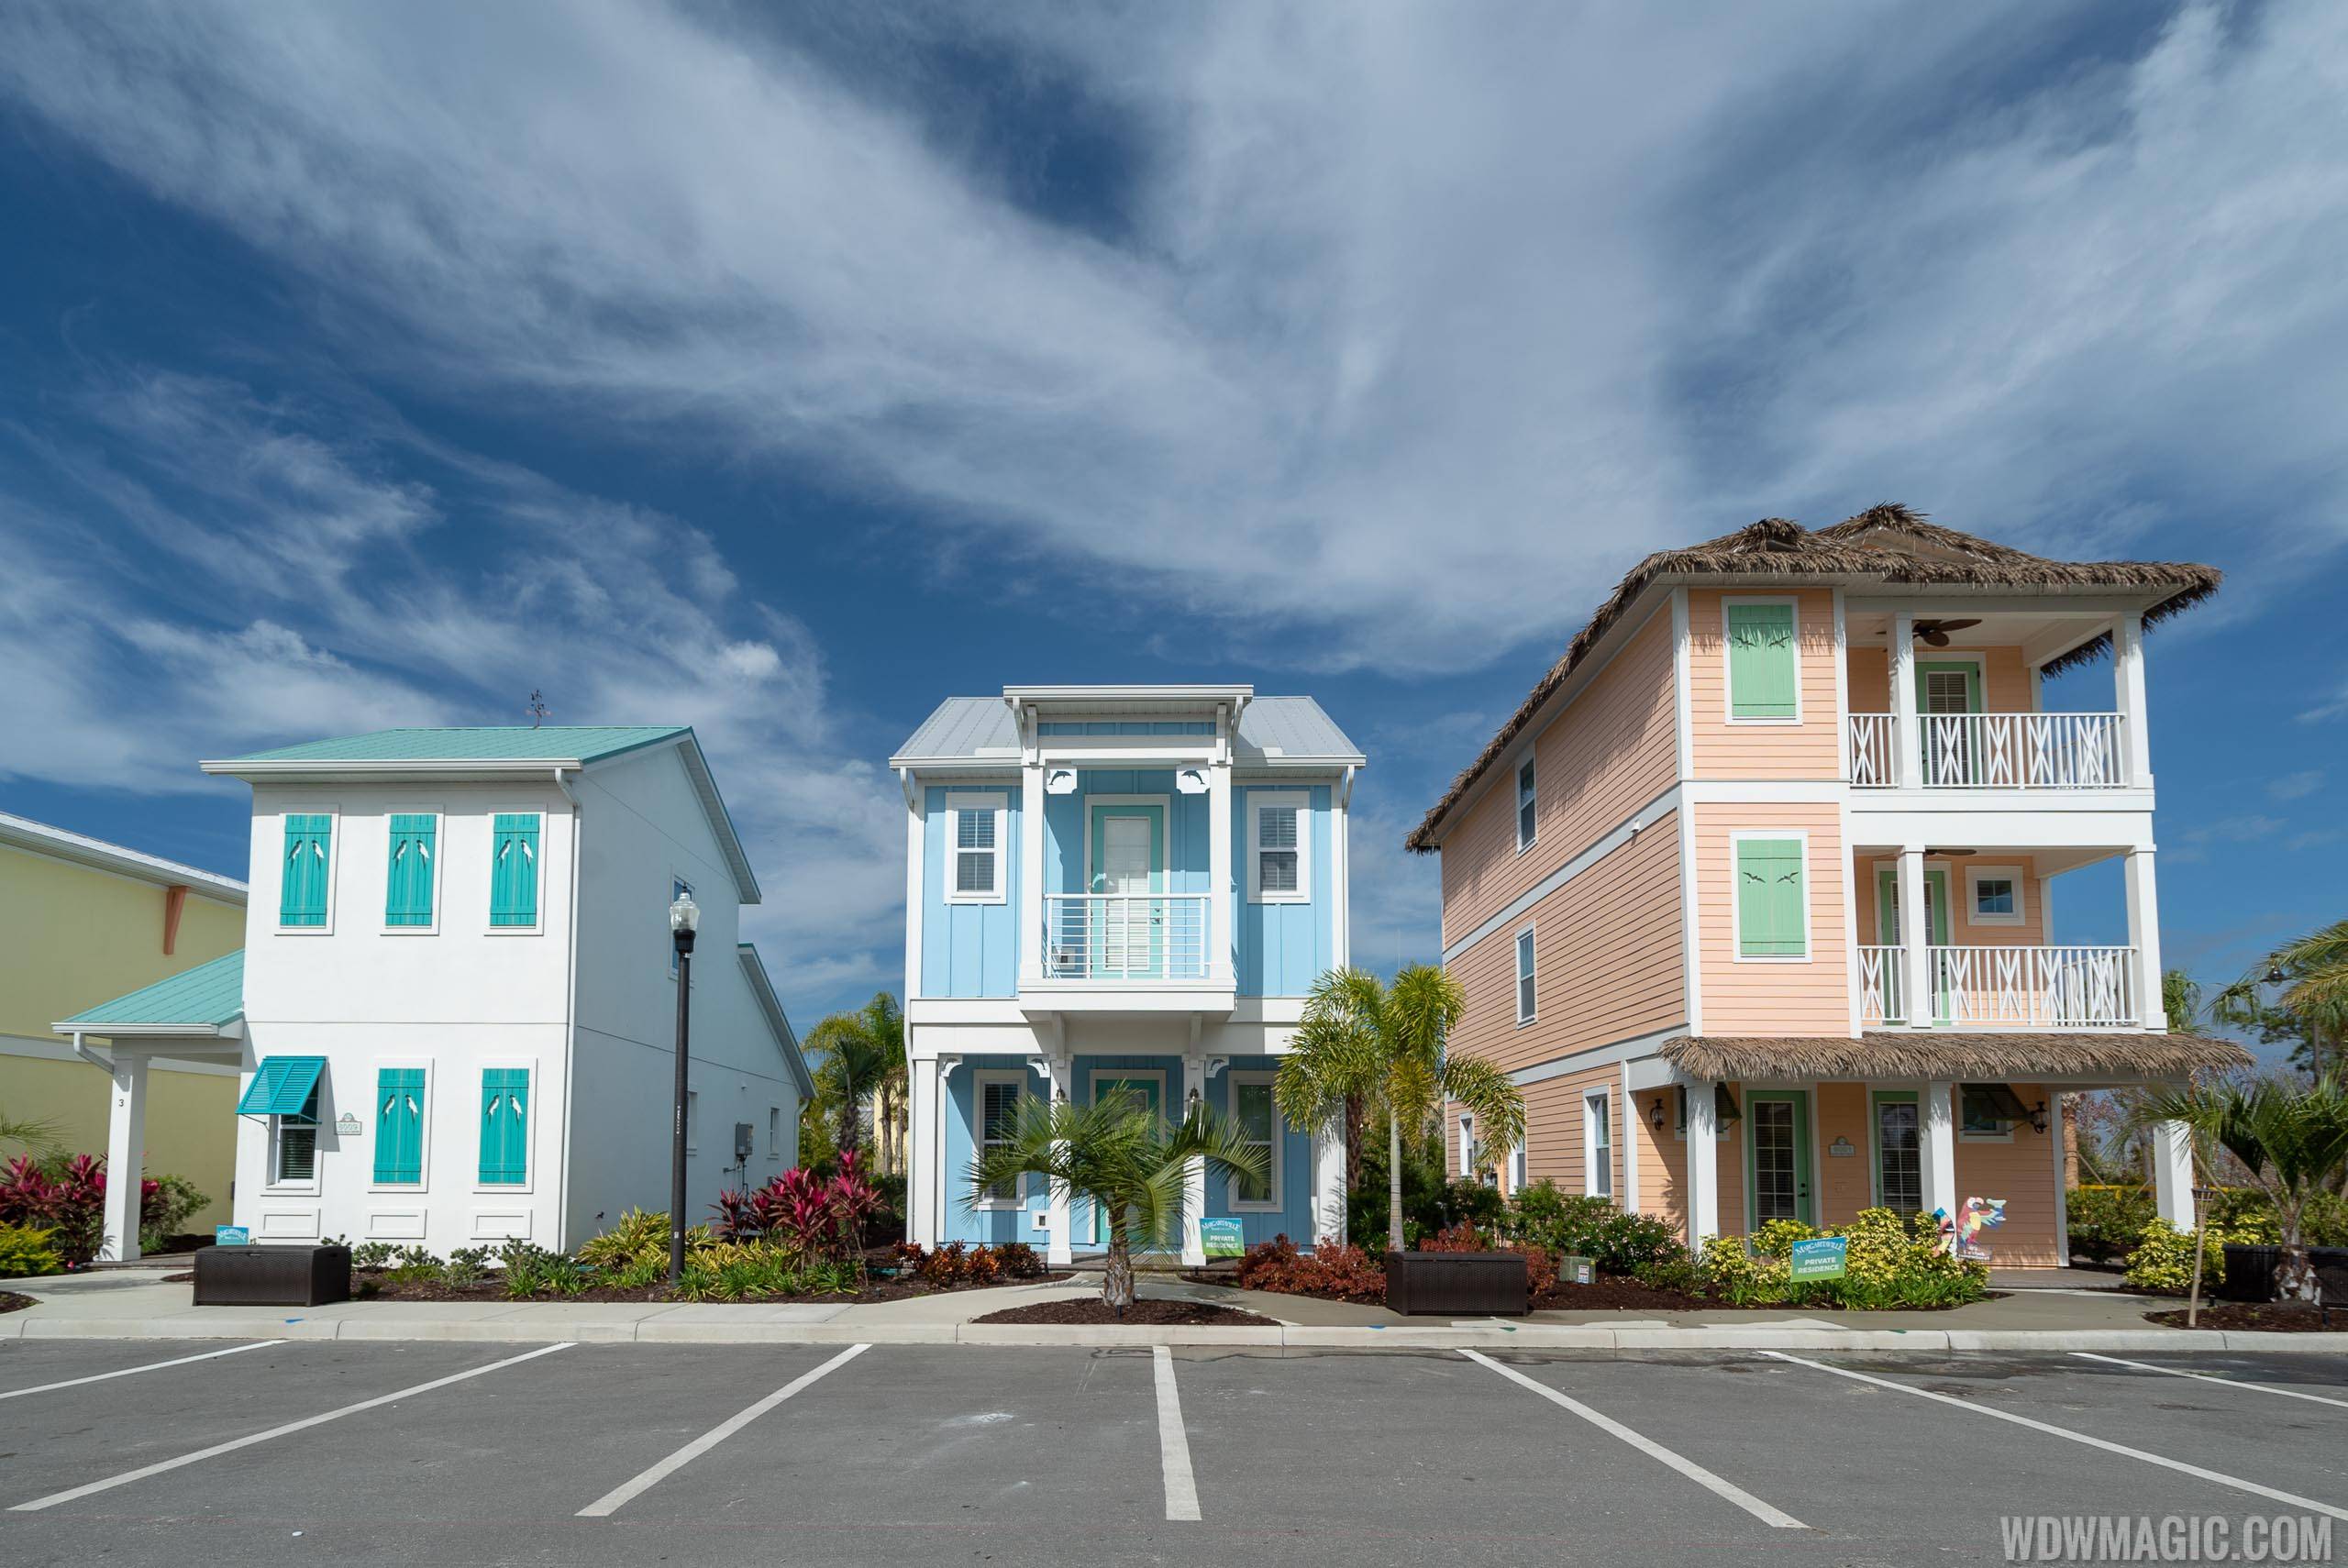 Margaritaville Resort Orlando - Cottages